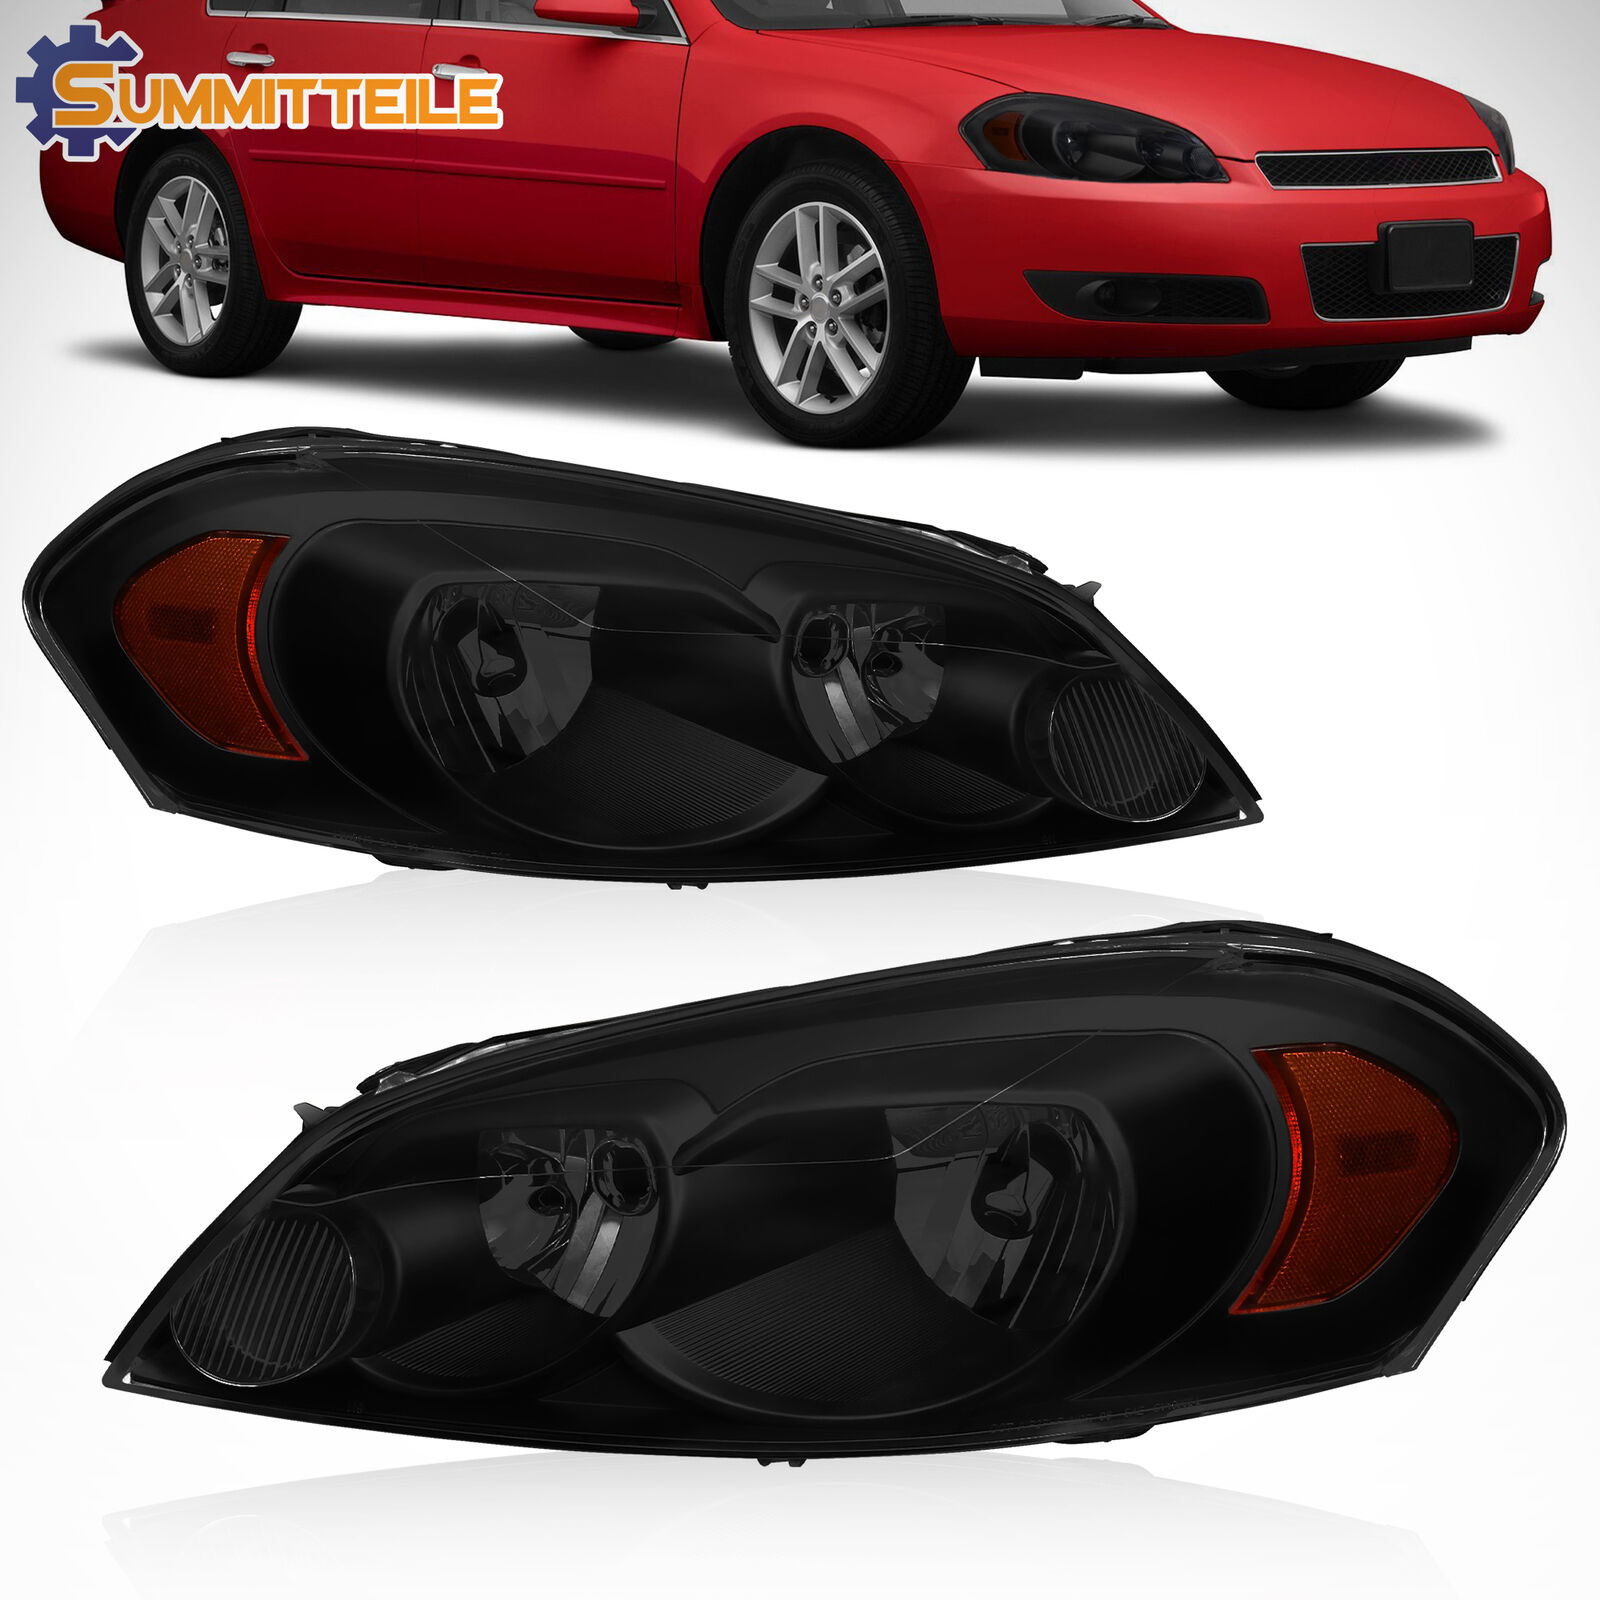 Front Smoke Headlight Assembly For 06-13 Chevrolet Impala 2014-16 Impala Limited